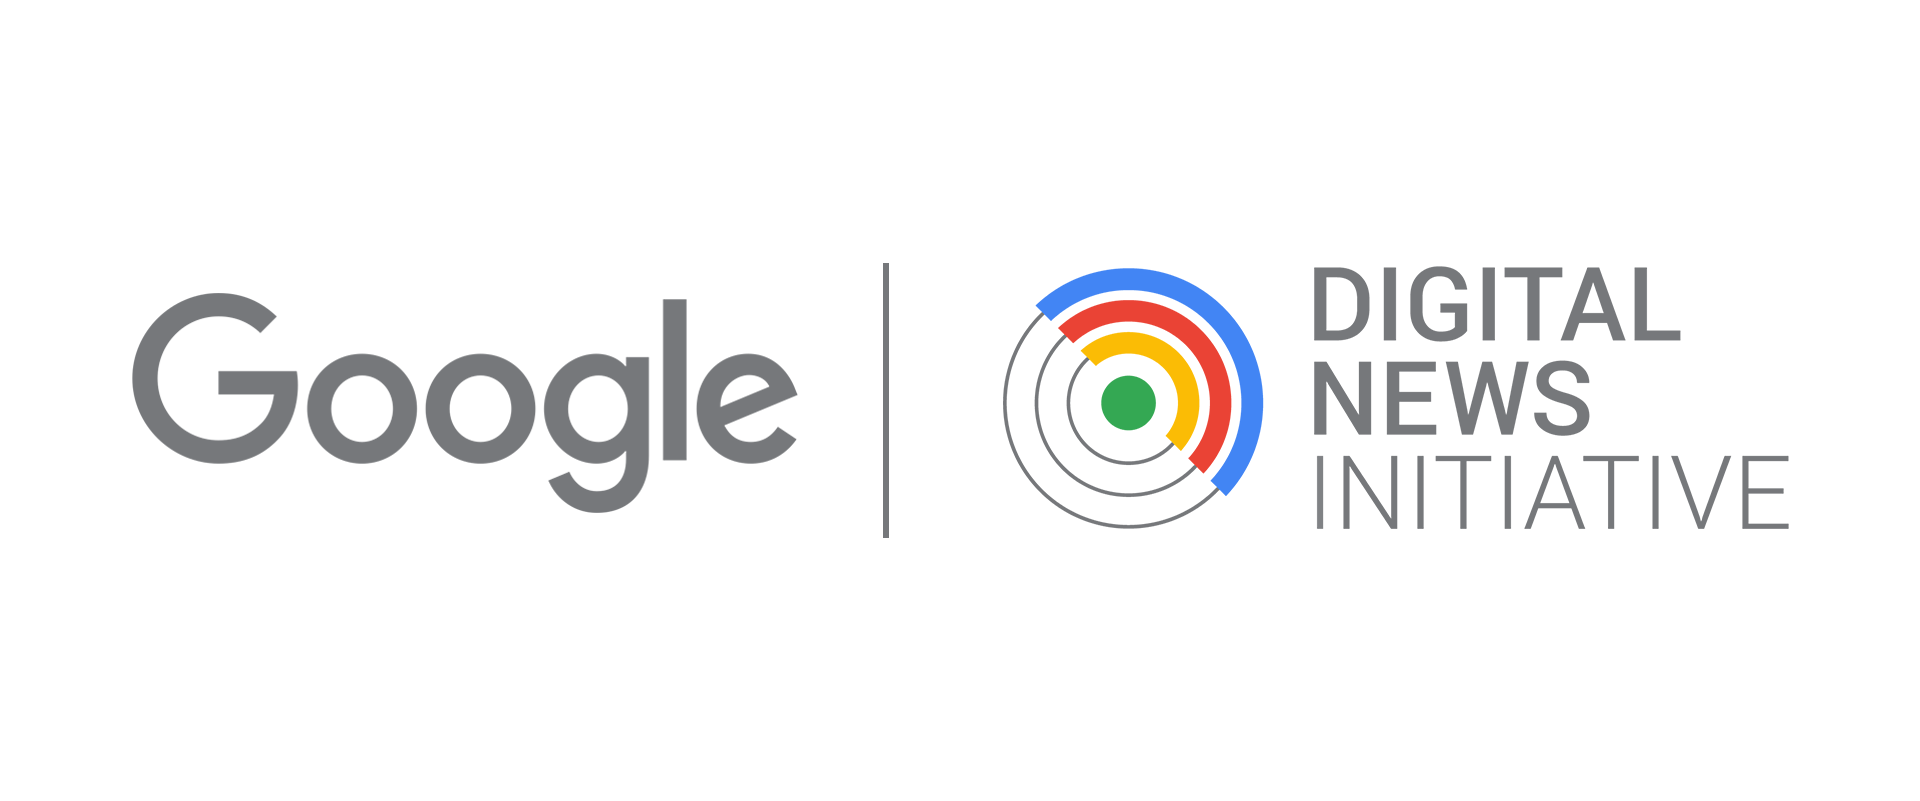 Google Digital News Initiative